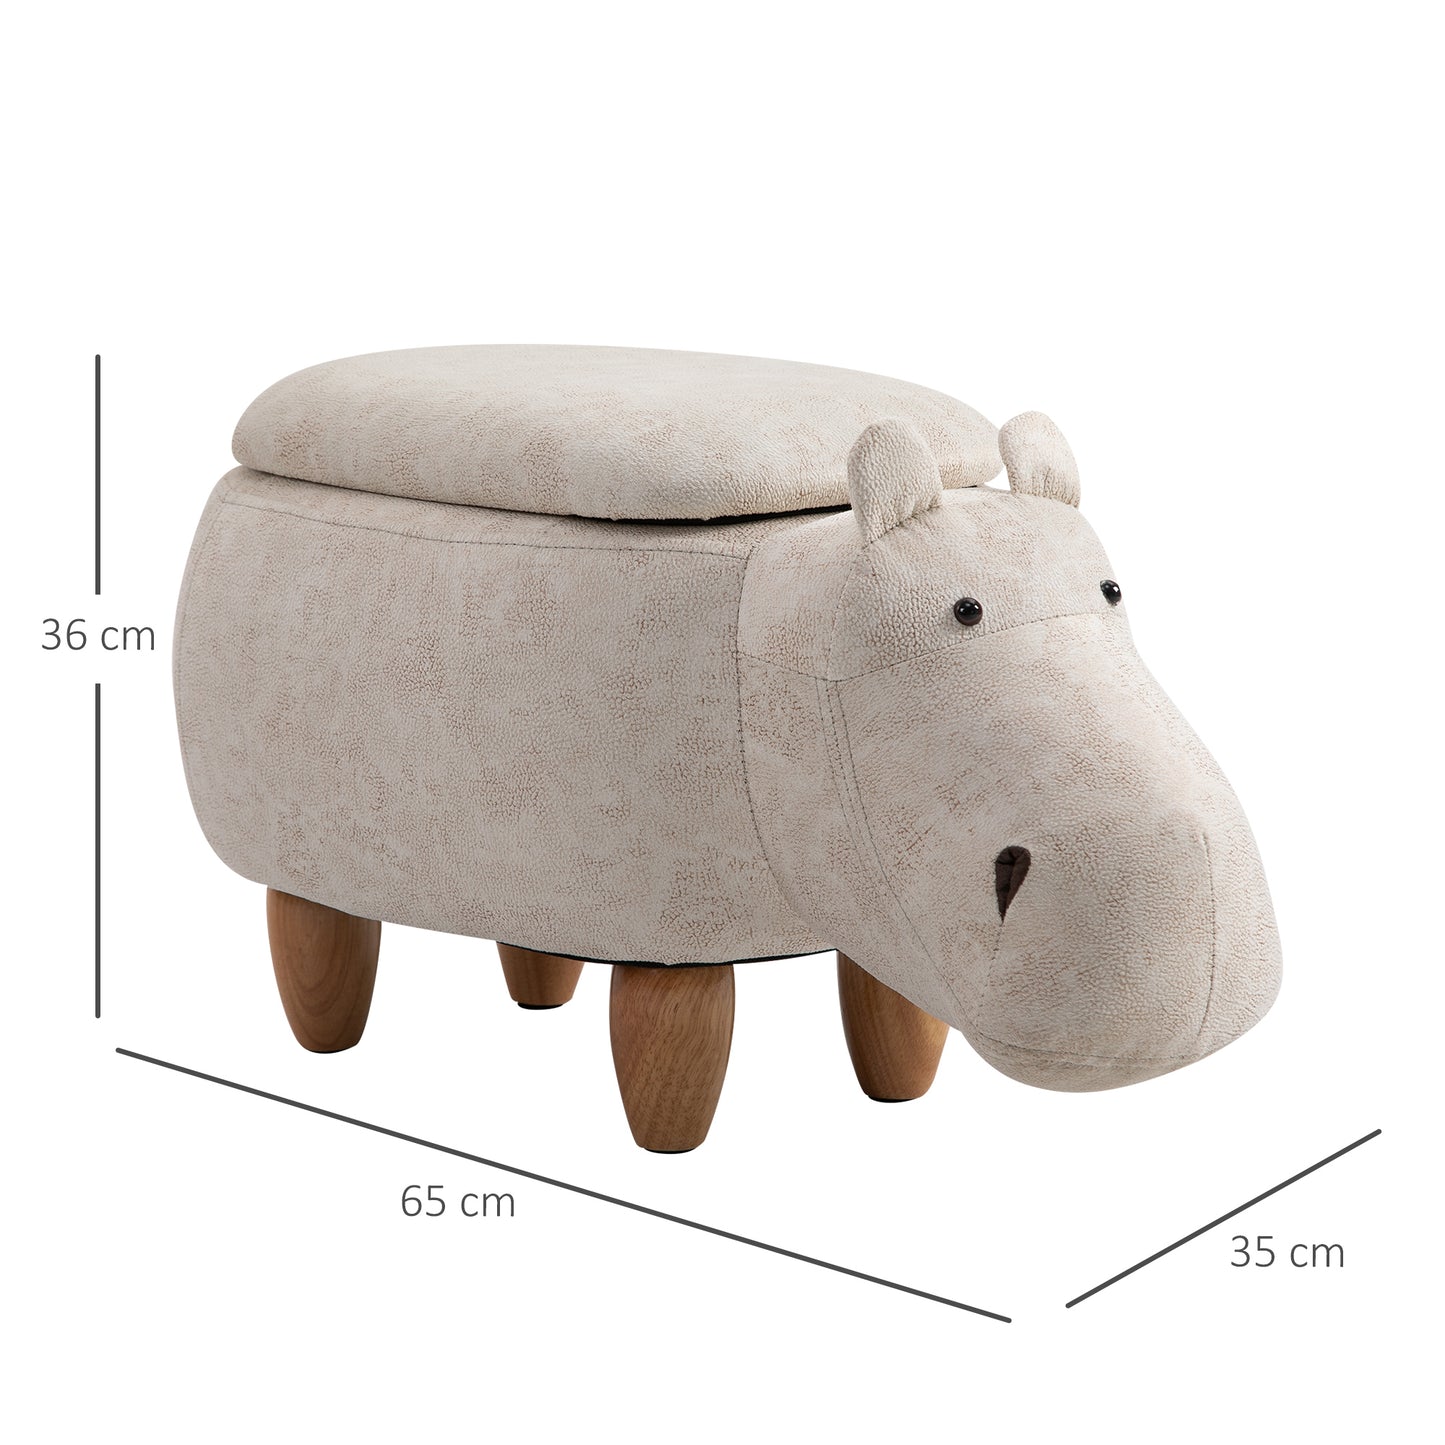 HOMCOM Hippo Storage Stool Cute Decoration Footrest Wood Frame Legs with Padding Lid Ottoman Animal Furniture Cream 36 x 65cm